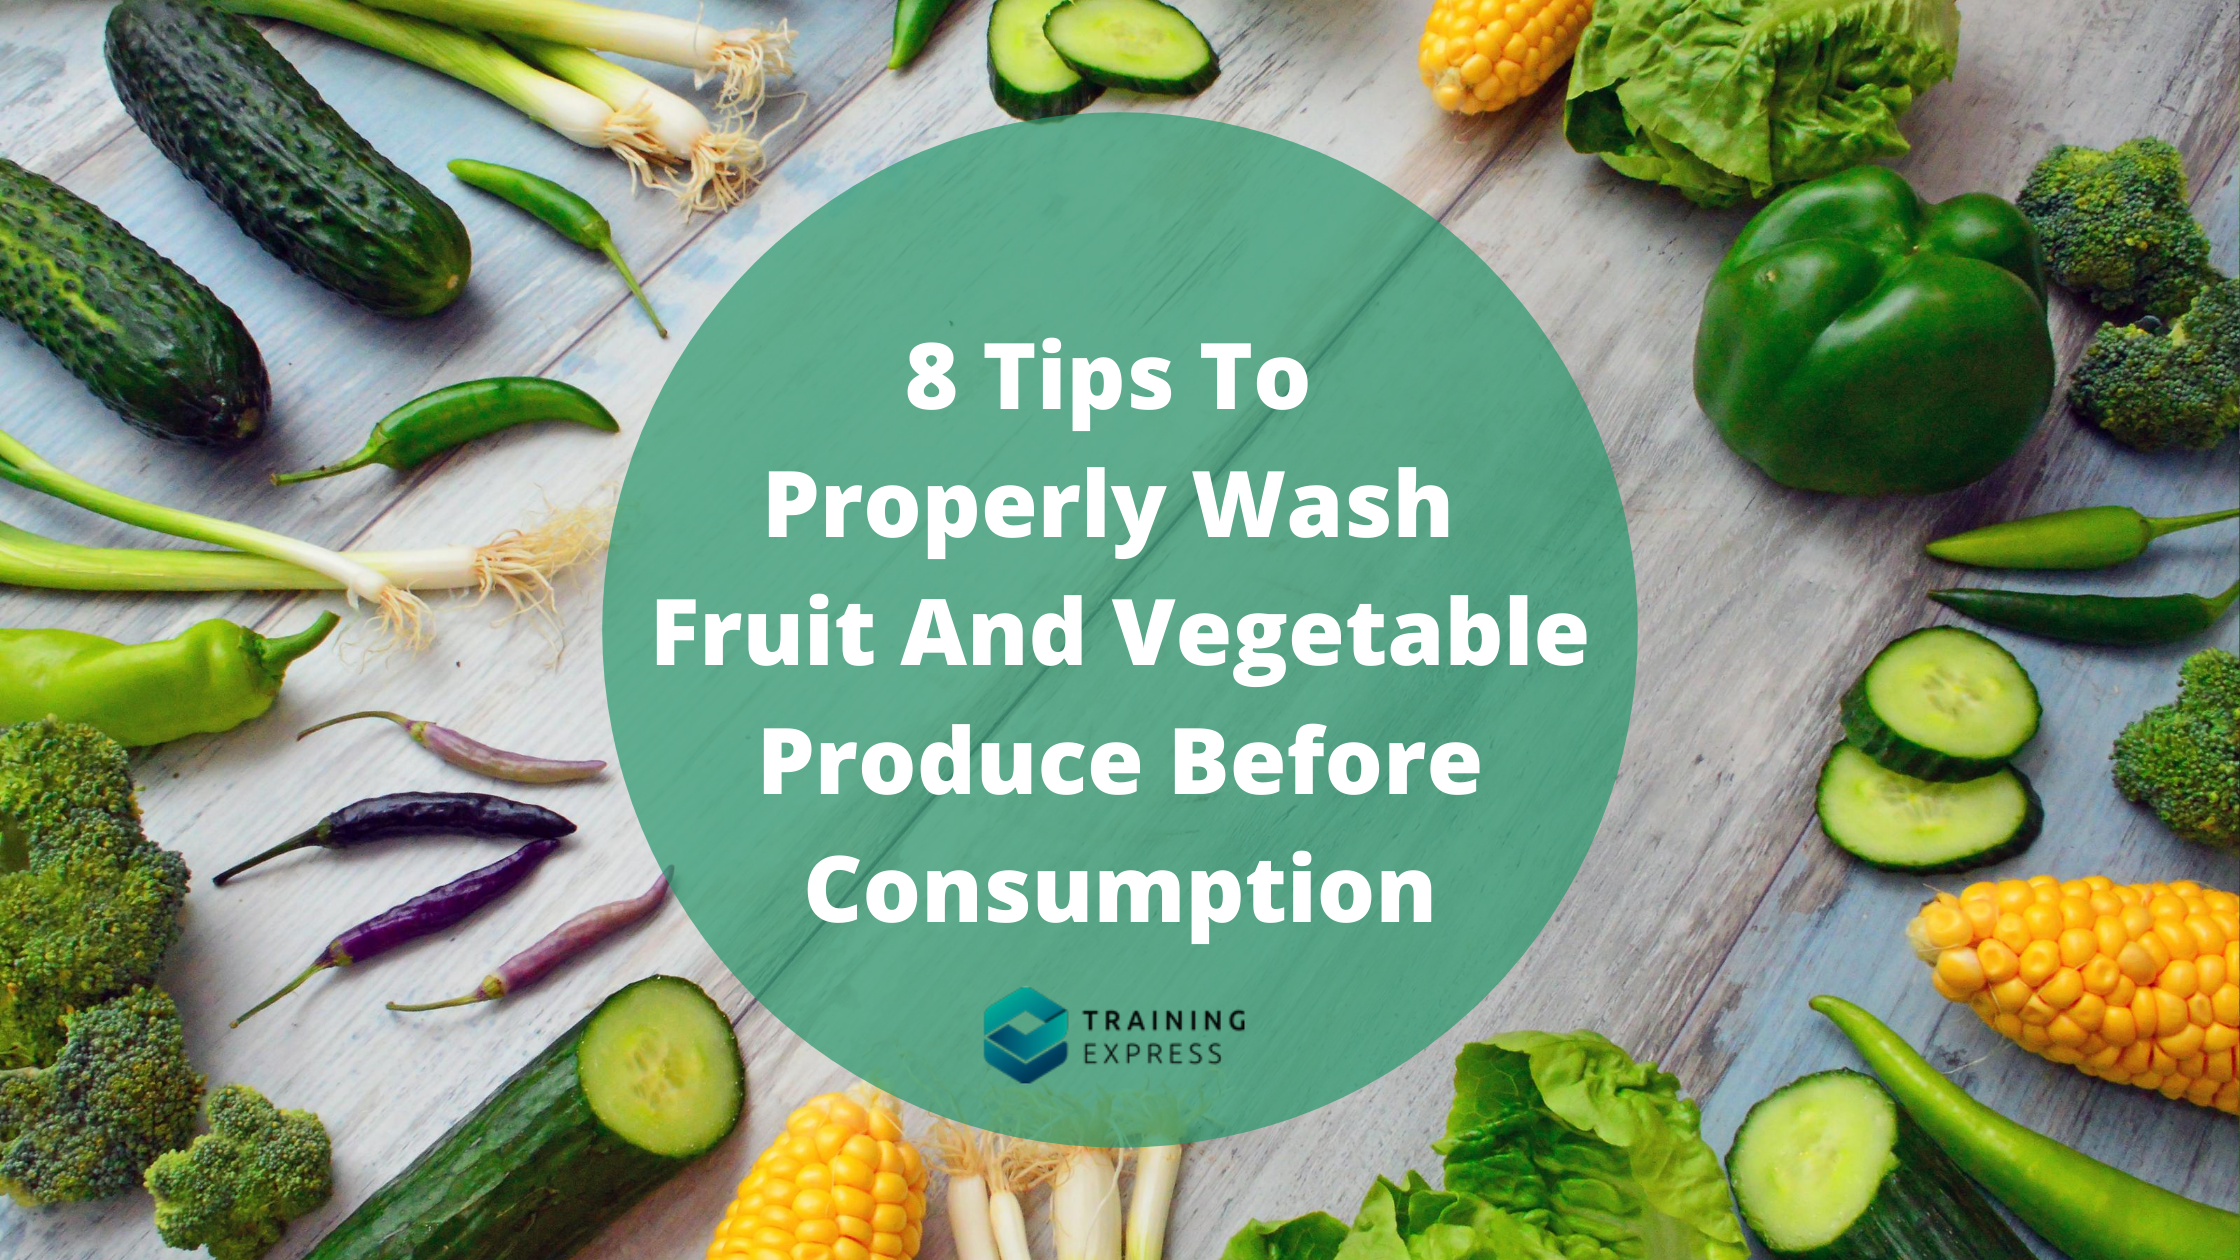 https://trainingexpress.org.uk/wp-content/uploads/2020/08/Tips-To-Properly-Wash-Fruit-And-Vegetable-Produce-.png